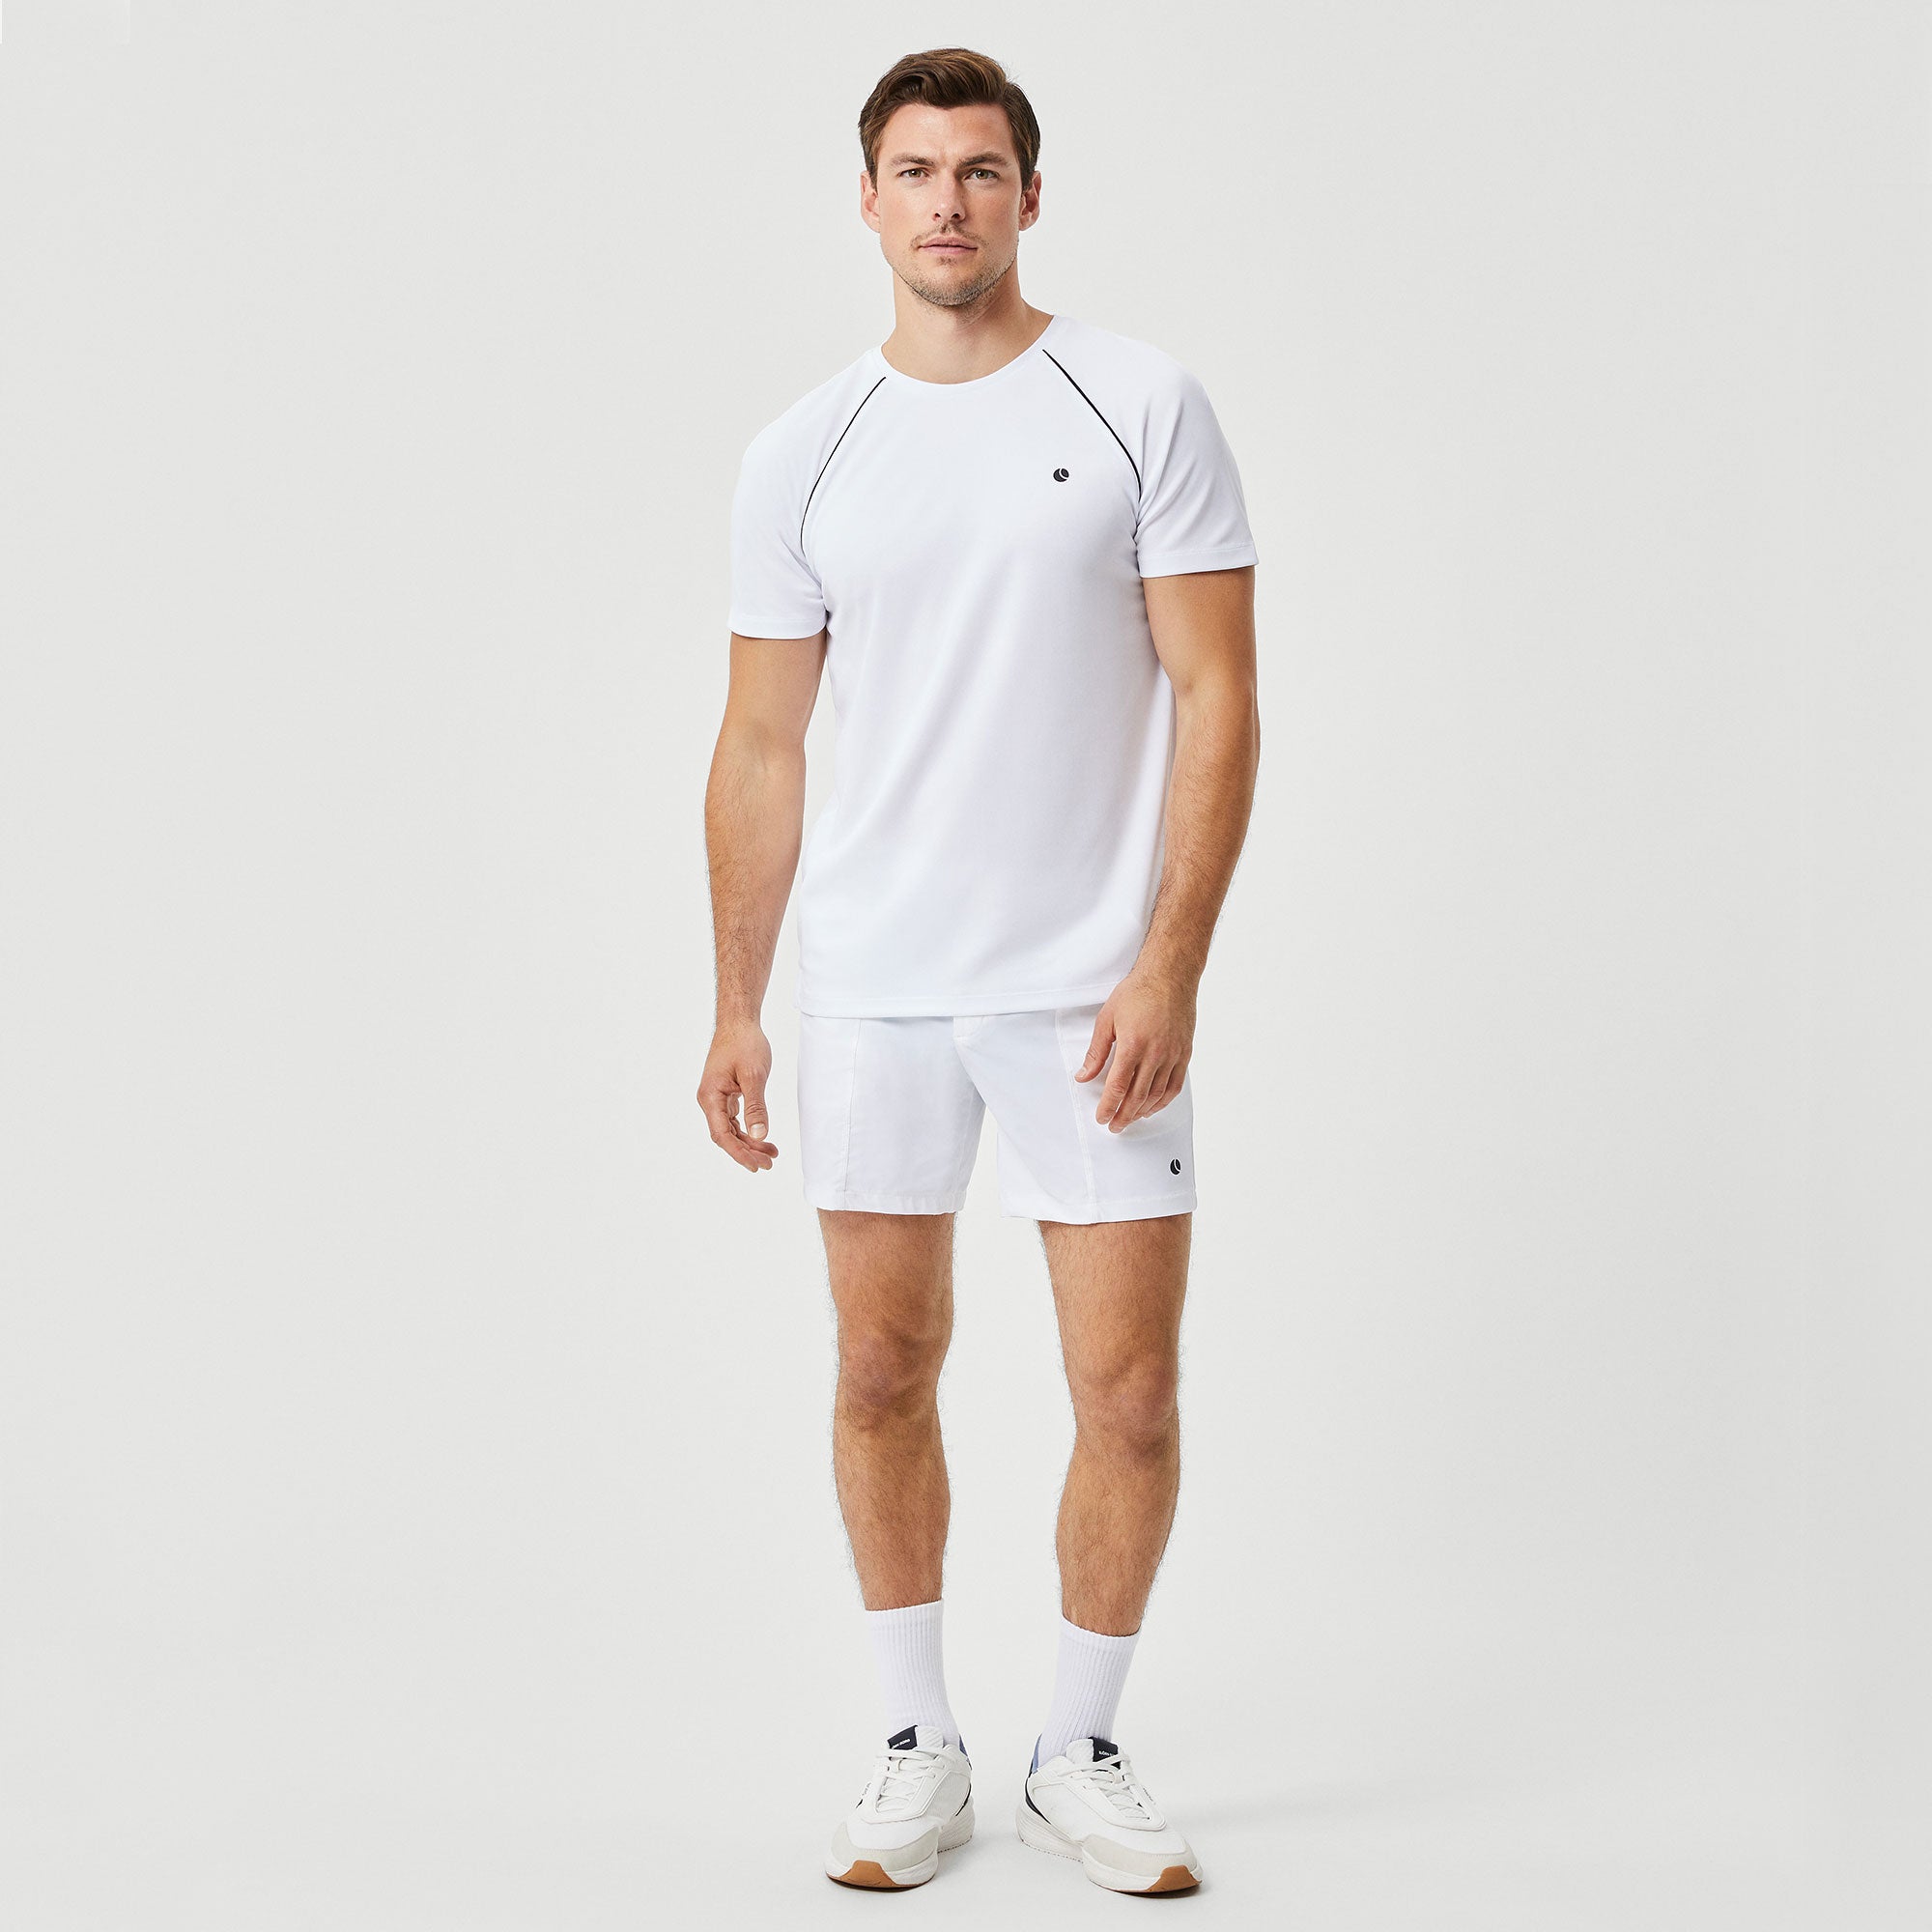 Björn Borg Ace Racquet Men's Tennis Shirt - White (5)